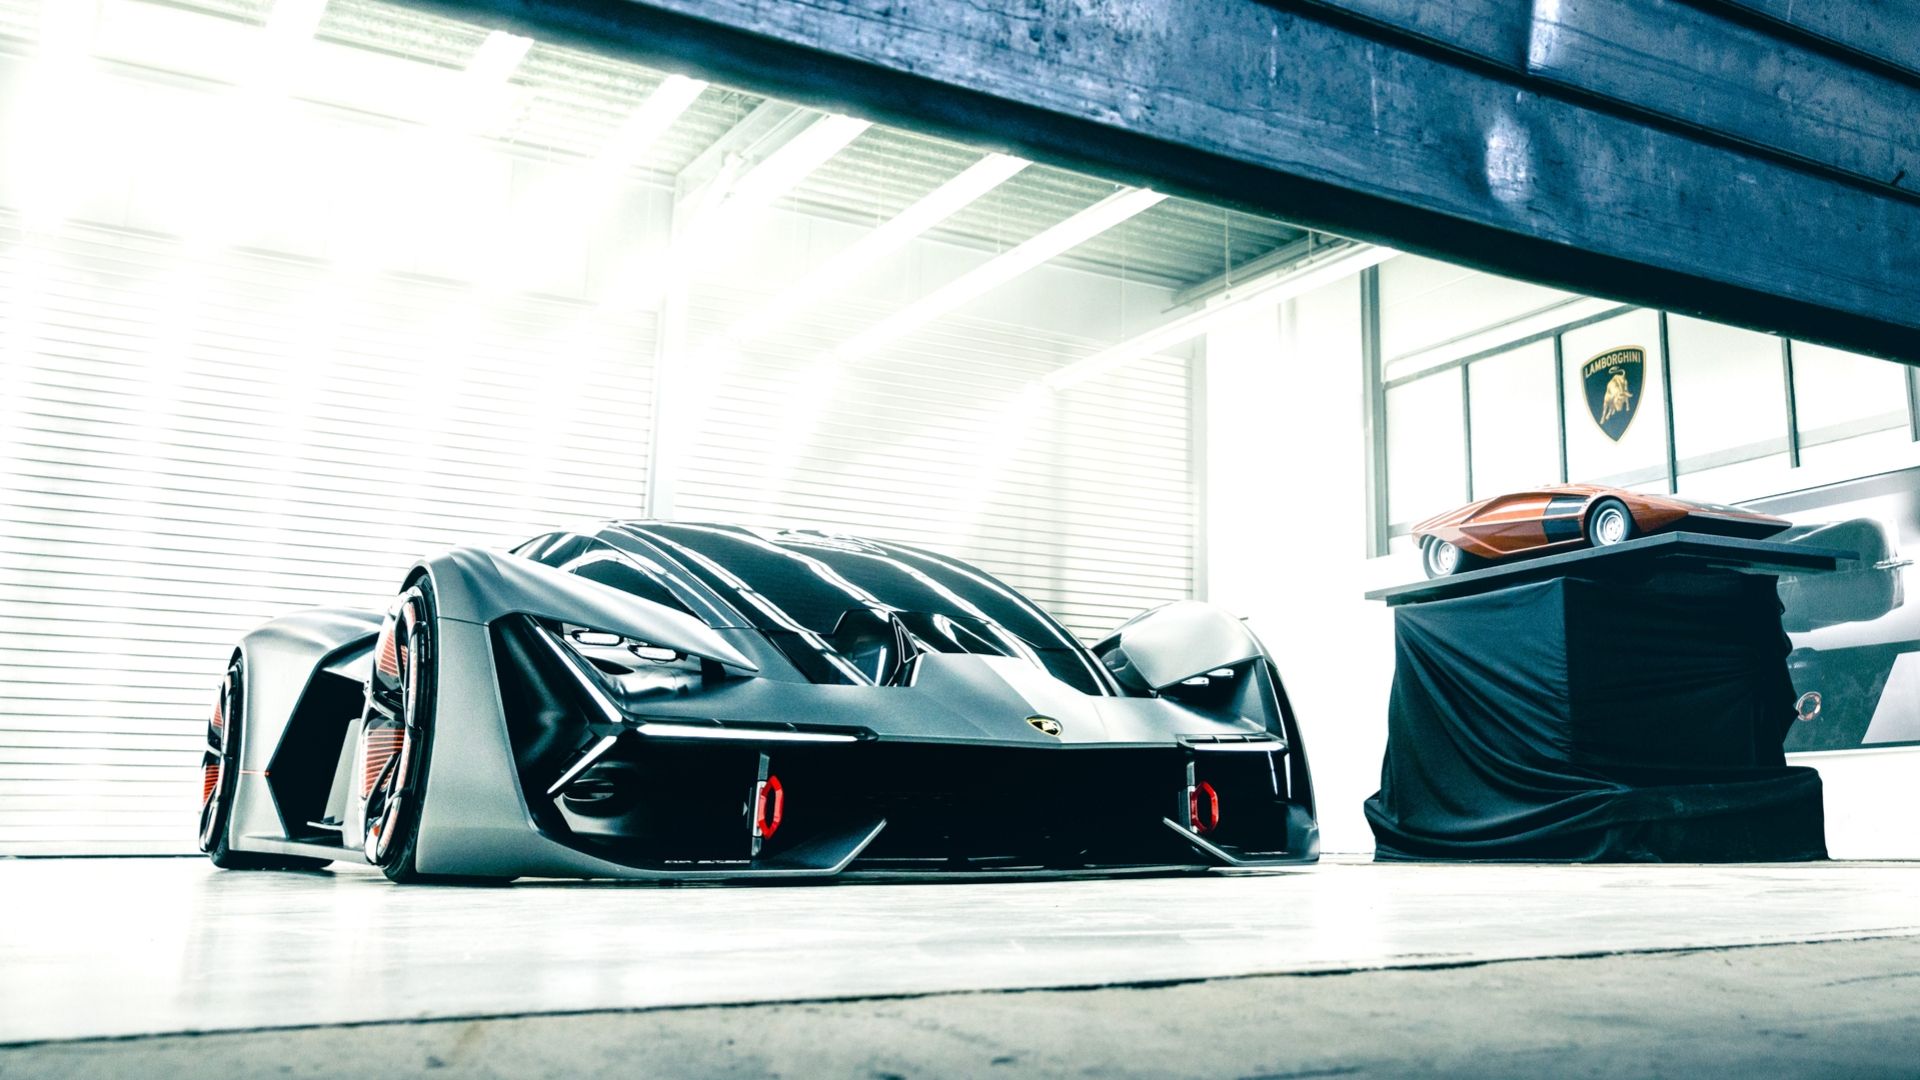 The Terzo Millennio is the Lamborghini of the future — Shoot for Details